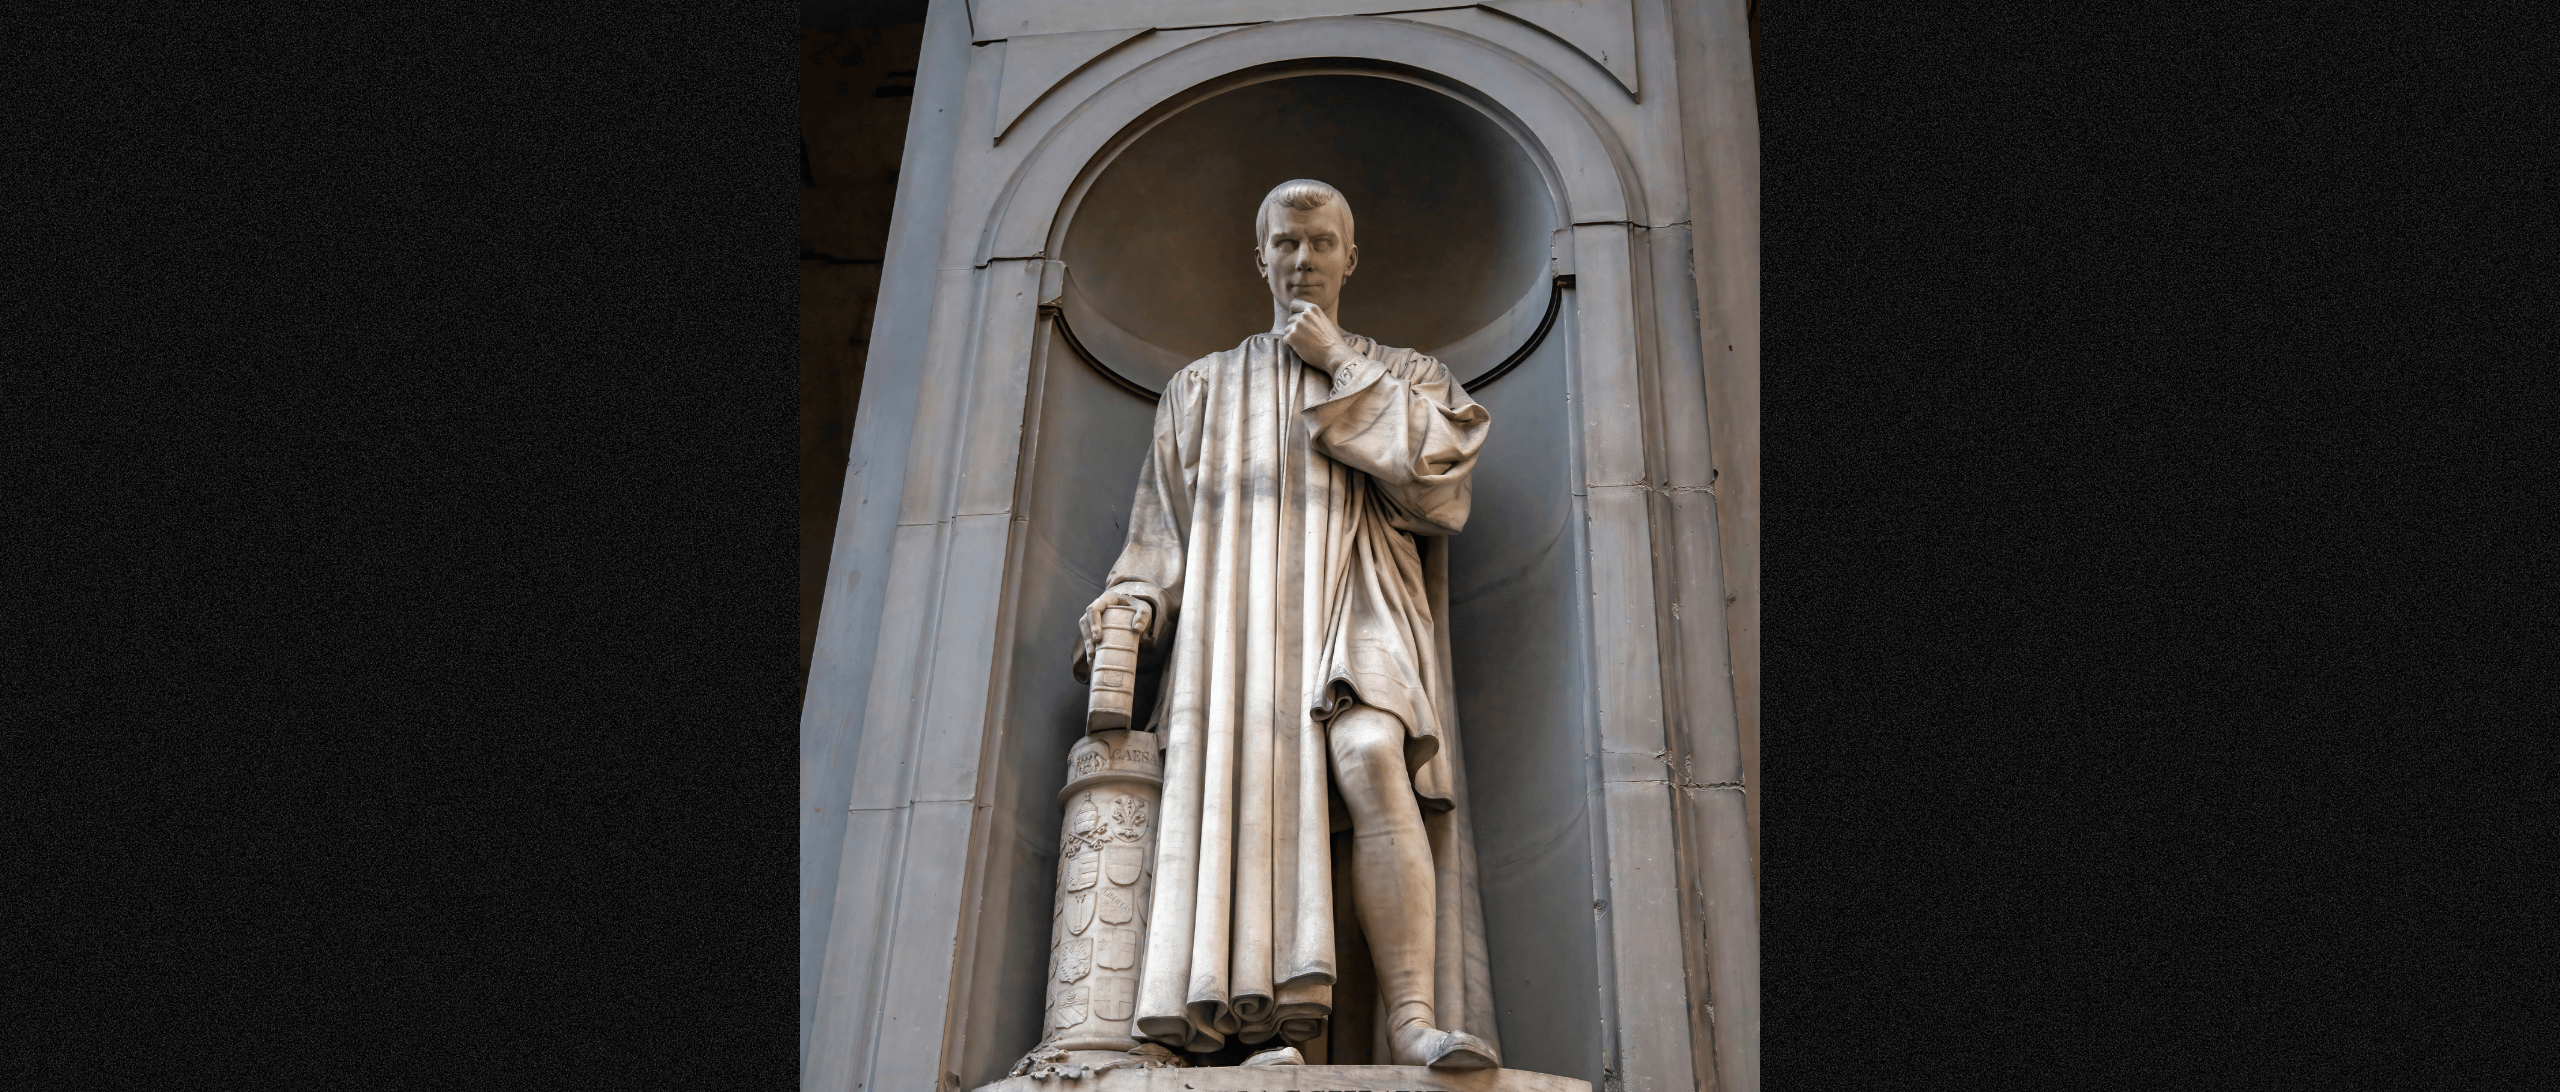 Niccolò Machiavelli statue outside the Uffizi Gallery in Italy (Taras Khimchak/Getty Images)